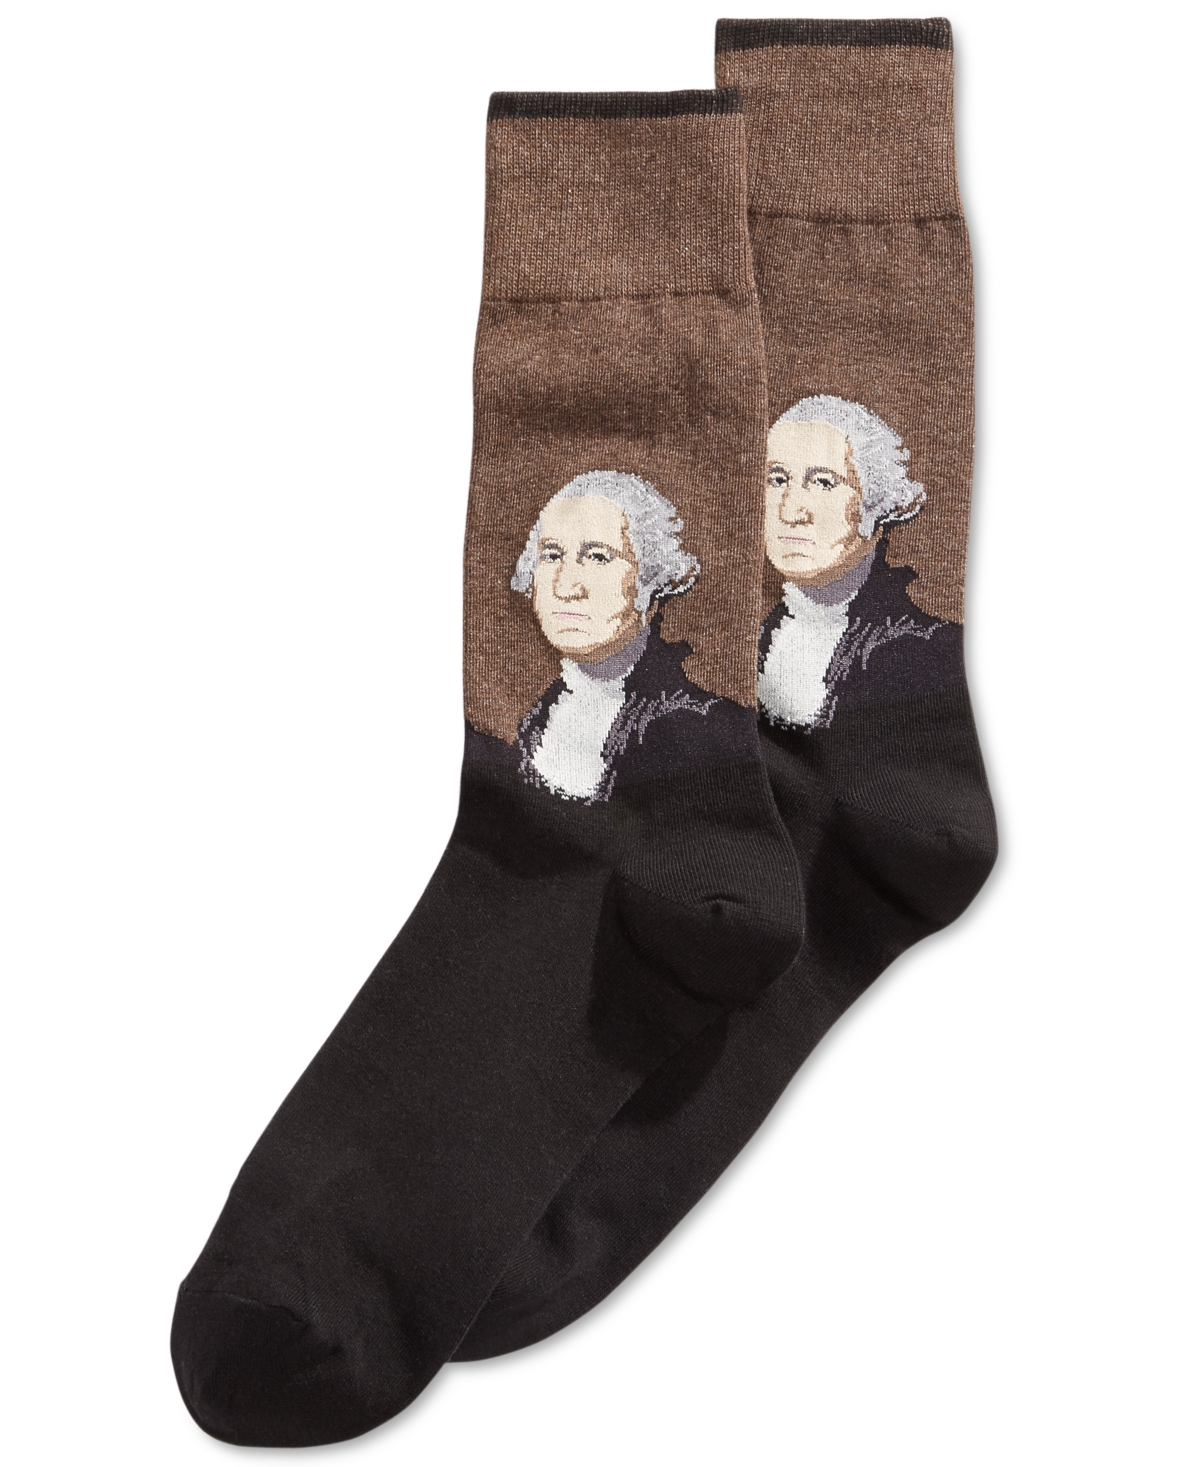 Hot Sox Men's Socks, George Washington Dress